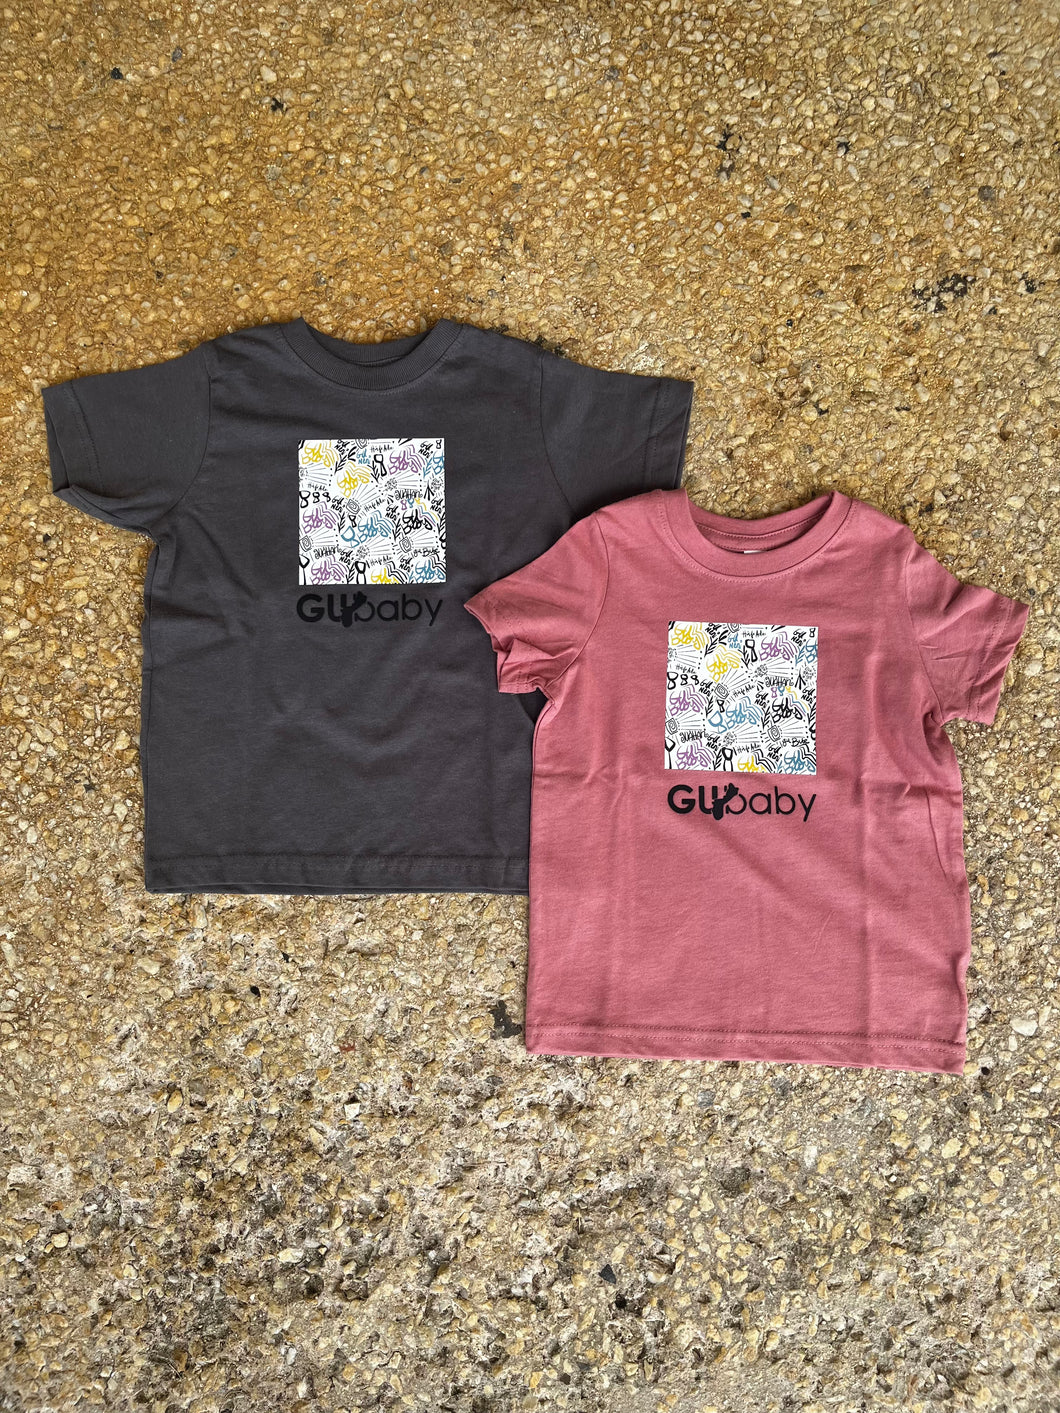 GUBaby T- Shirts